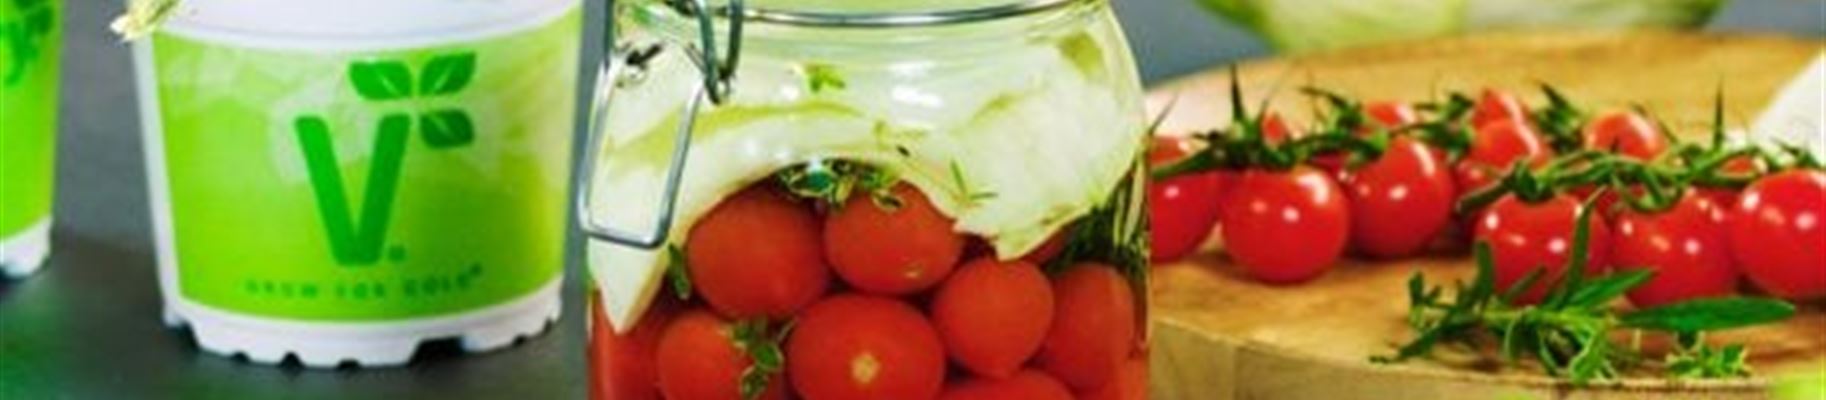 fermentierte-tomaten-570x382.jpg